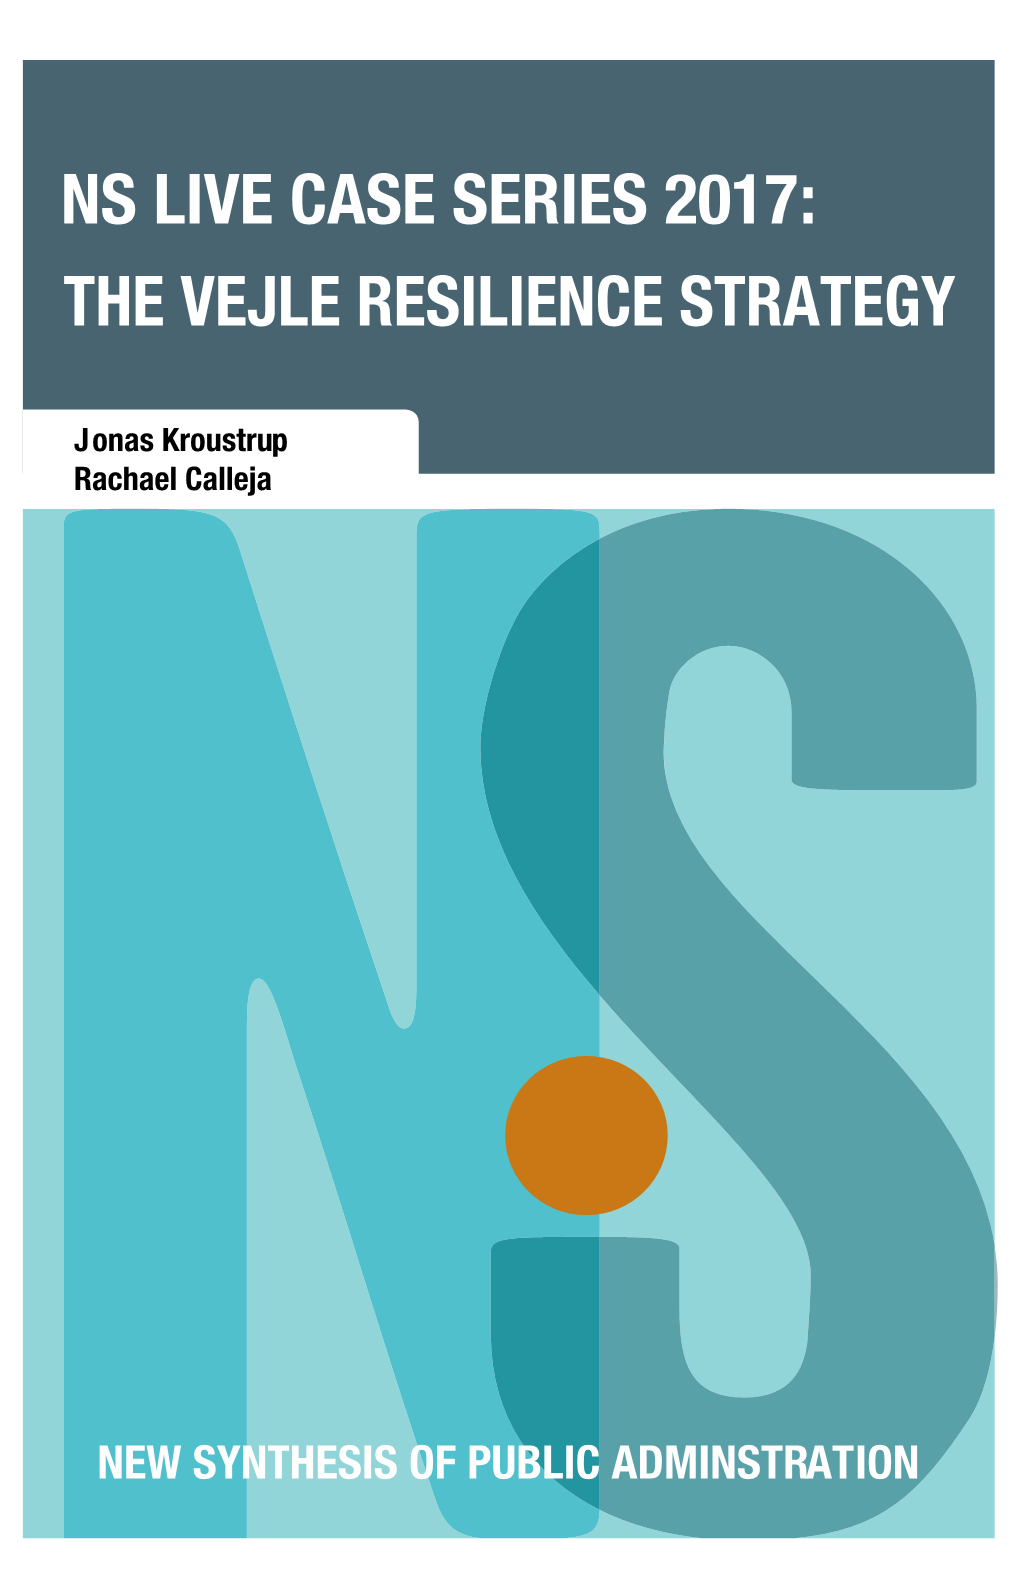 The Vejle Resilience Strategy